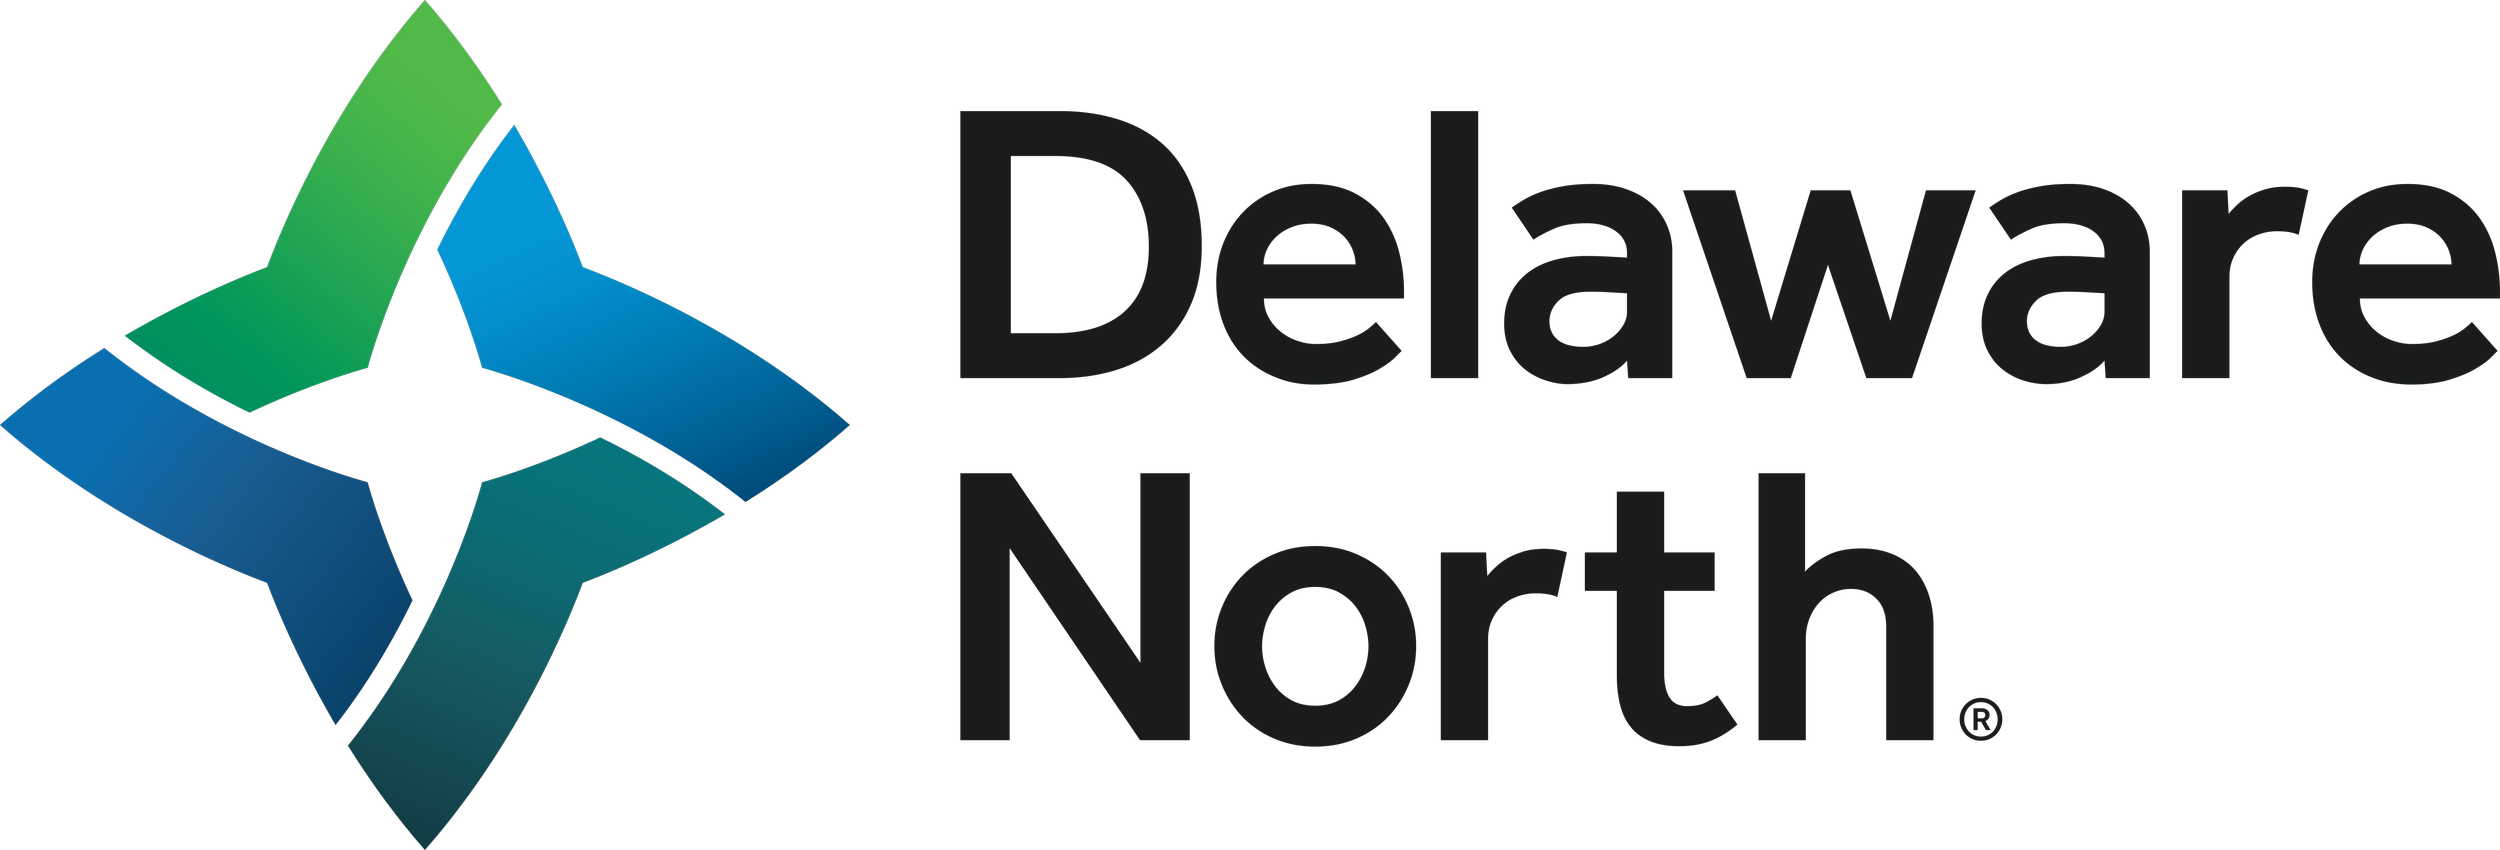 Delaware North logo high res png.png